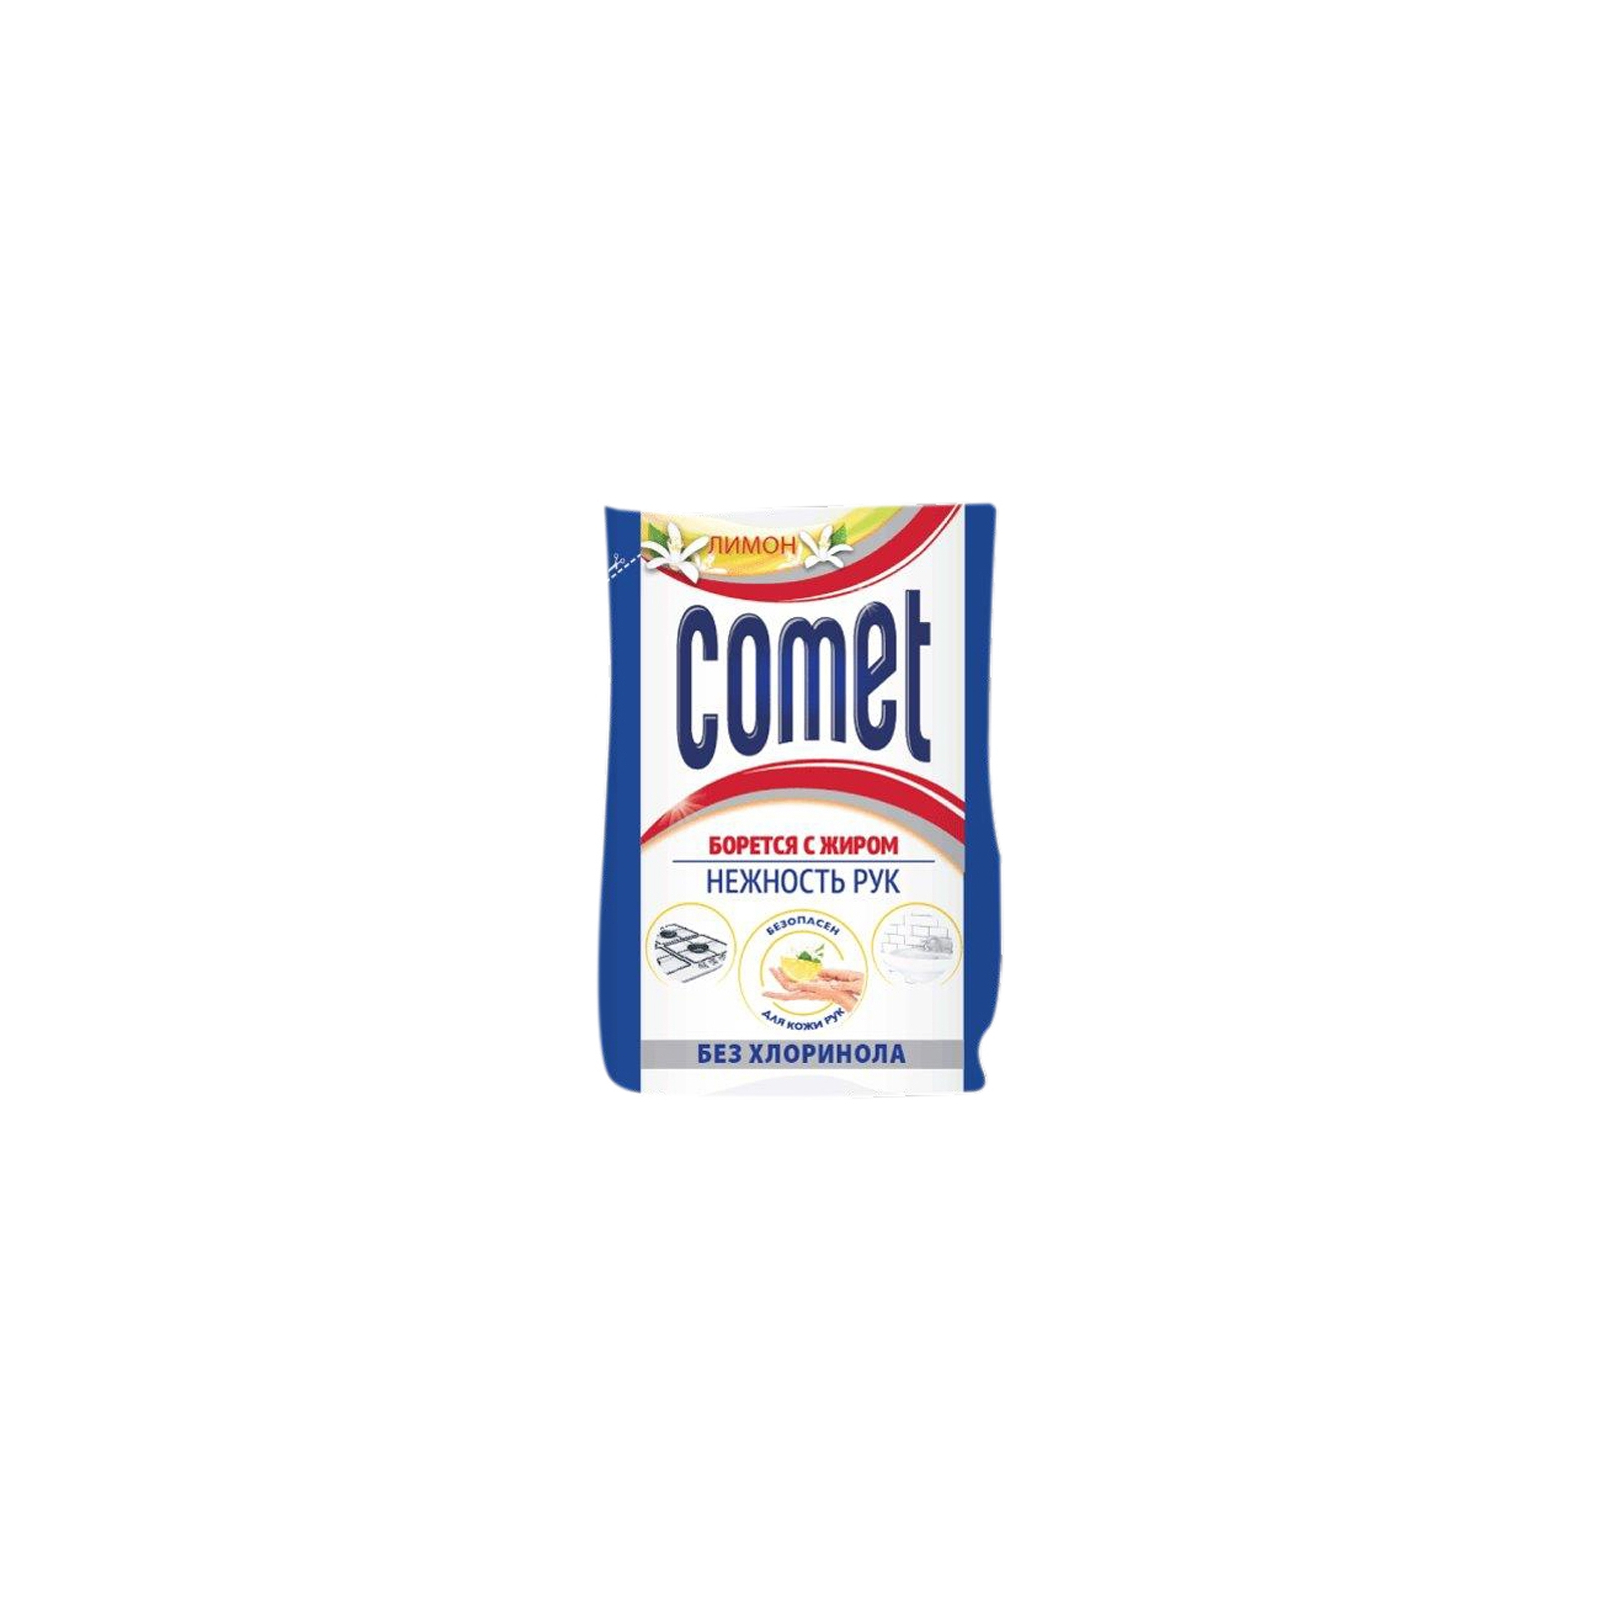 Порошок для чистки кухни Comet Лимон без хлоринола 350 г (8001480701465)